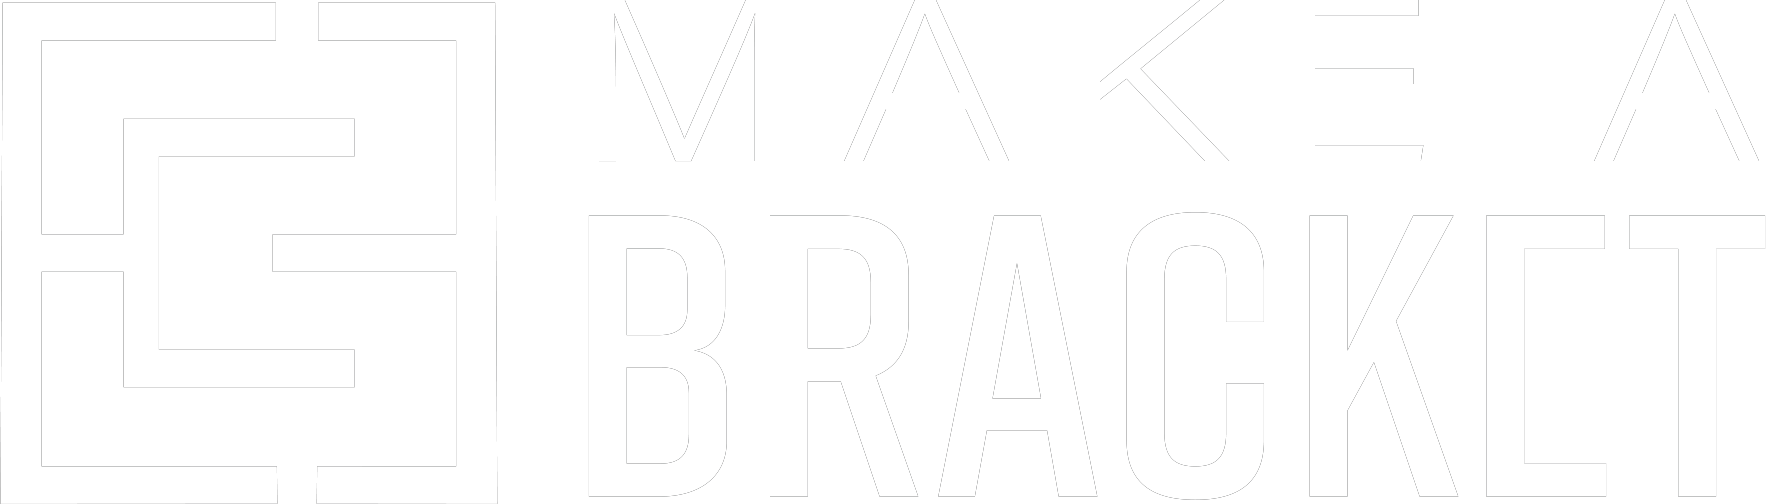 Make a Bracket Logo